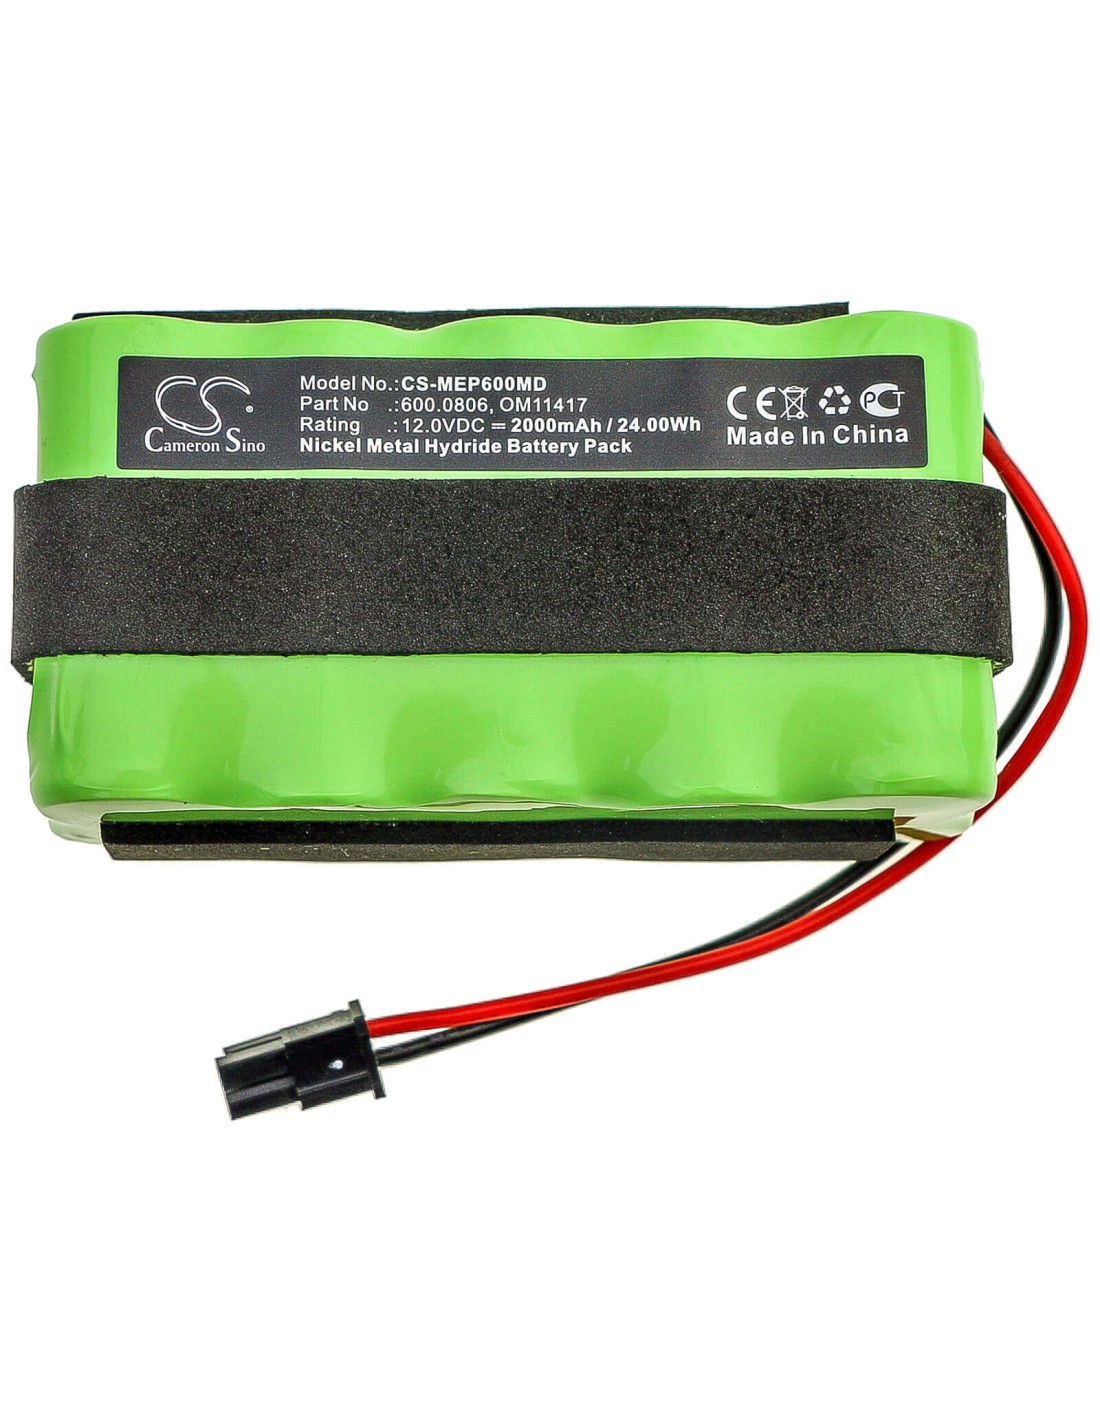 Battery for Medela, Aspirateur Clario, Clario Home Care Suction Pump, Pump Clario 12V, 2000mAh - 24.00Wh